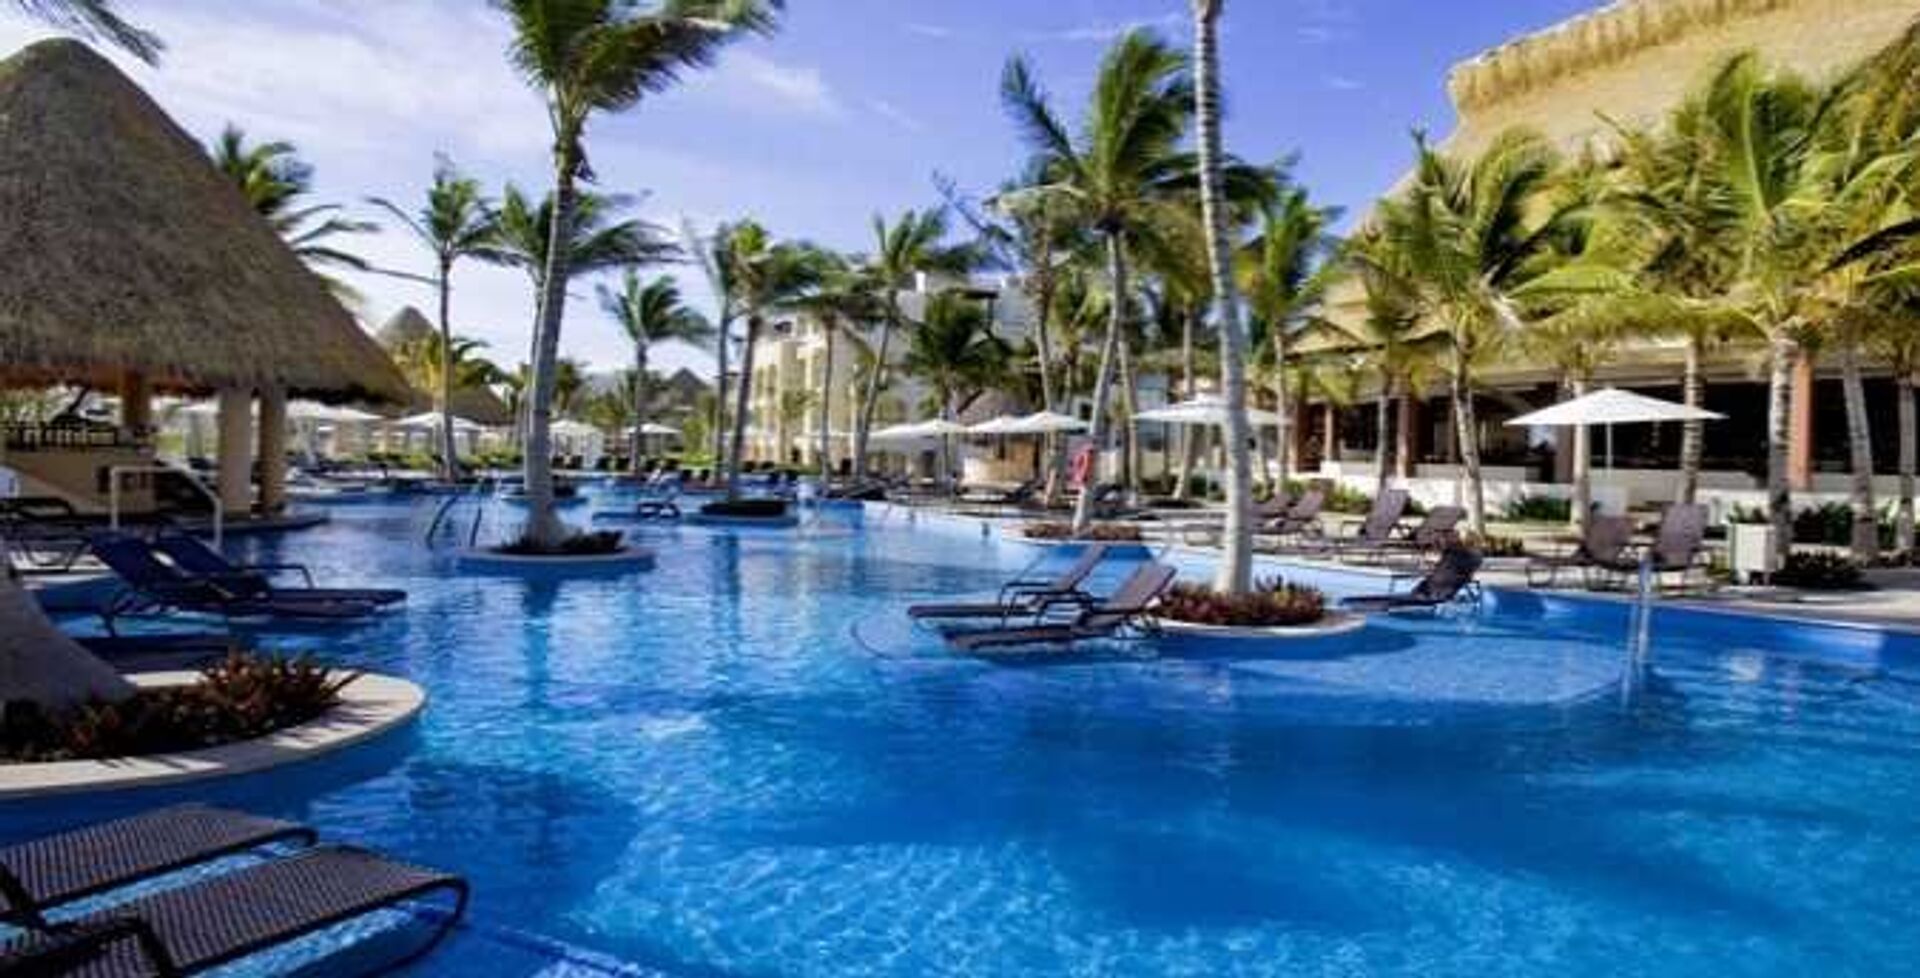 #Отель Moon Palace Casino, Golf & Spa Resort, ставший Hard Rock Hotel & Casino Punta Cana - ПРАЙМ, 1920, 05.04.2022